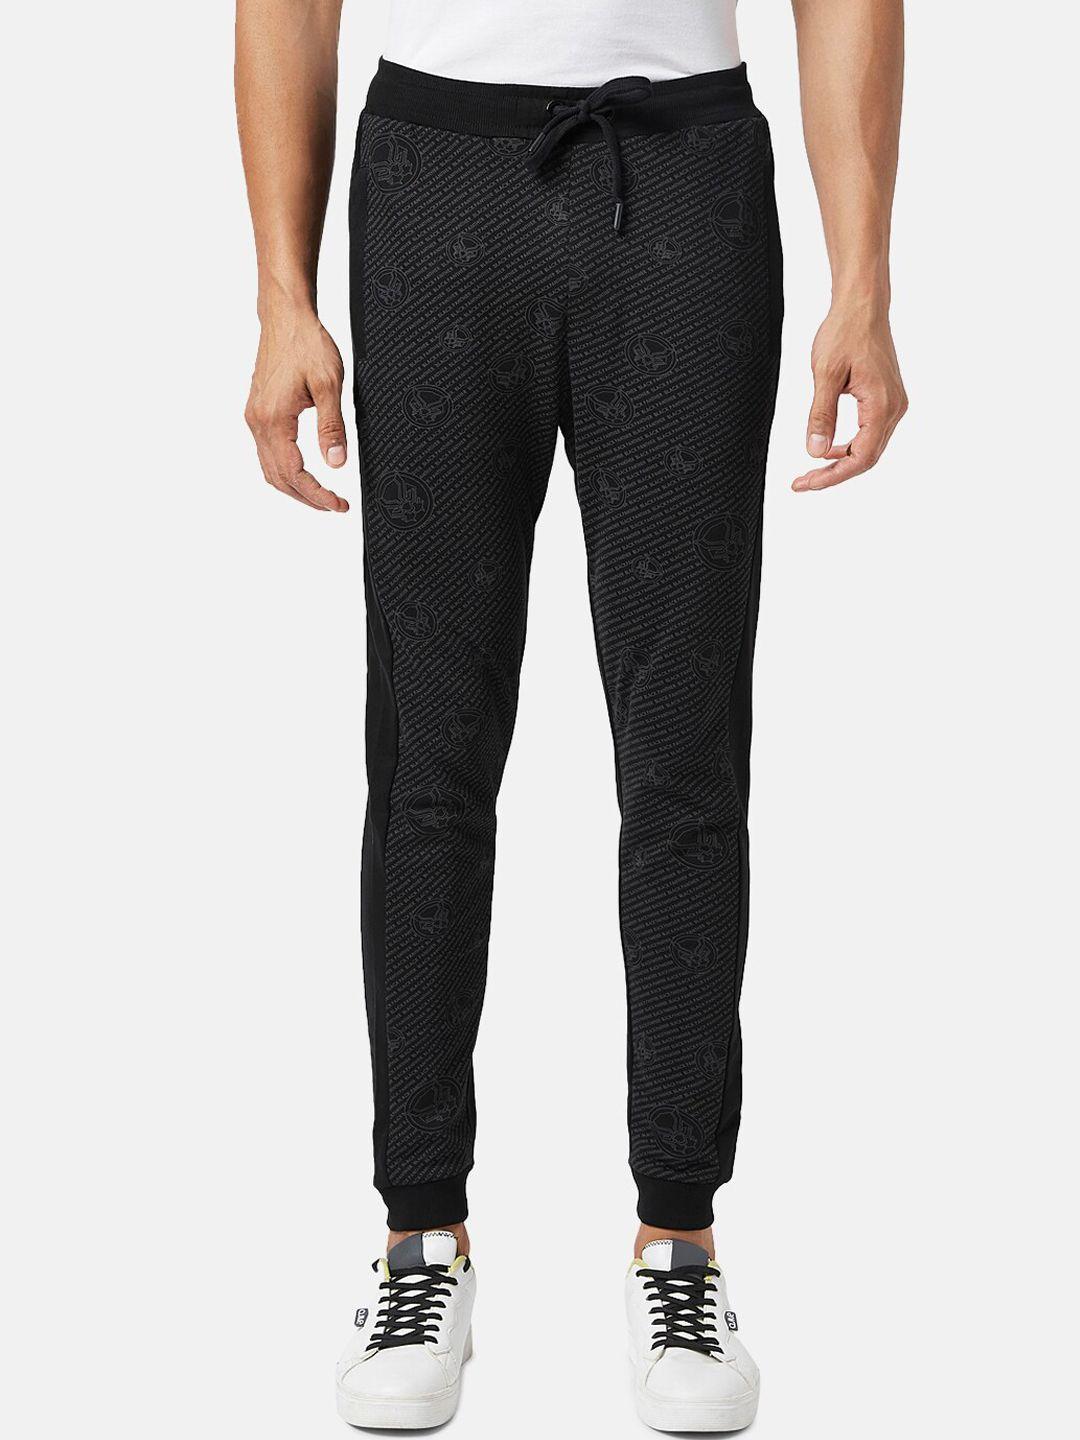 sf jeans pantaloons men mid-rise black panther printed cotton joggers